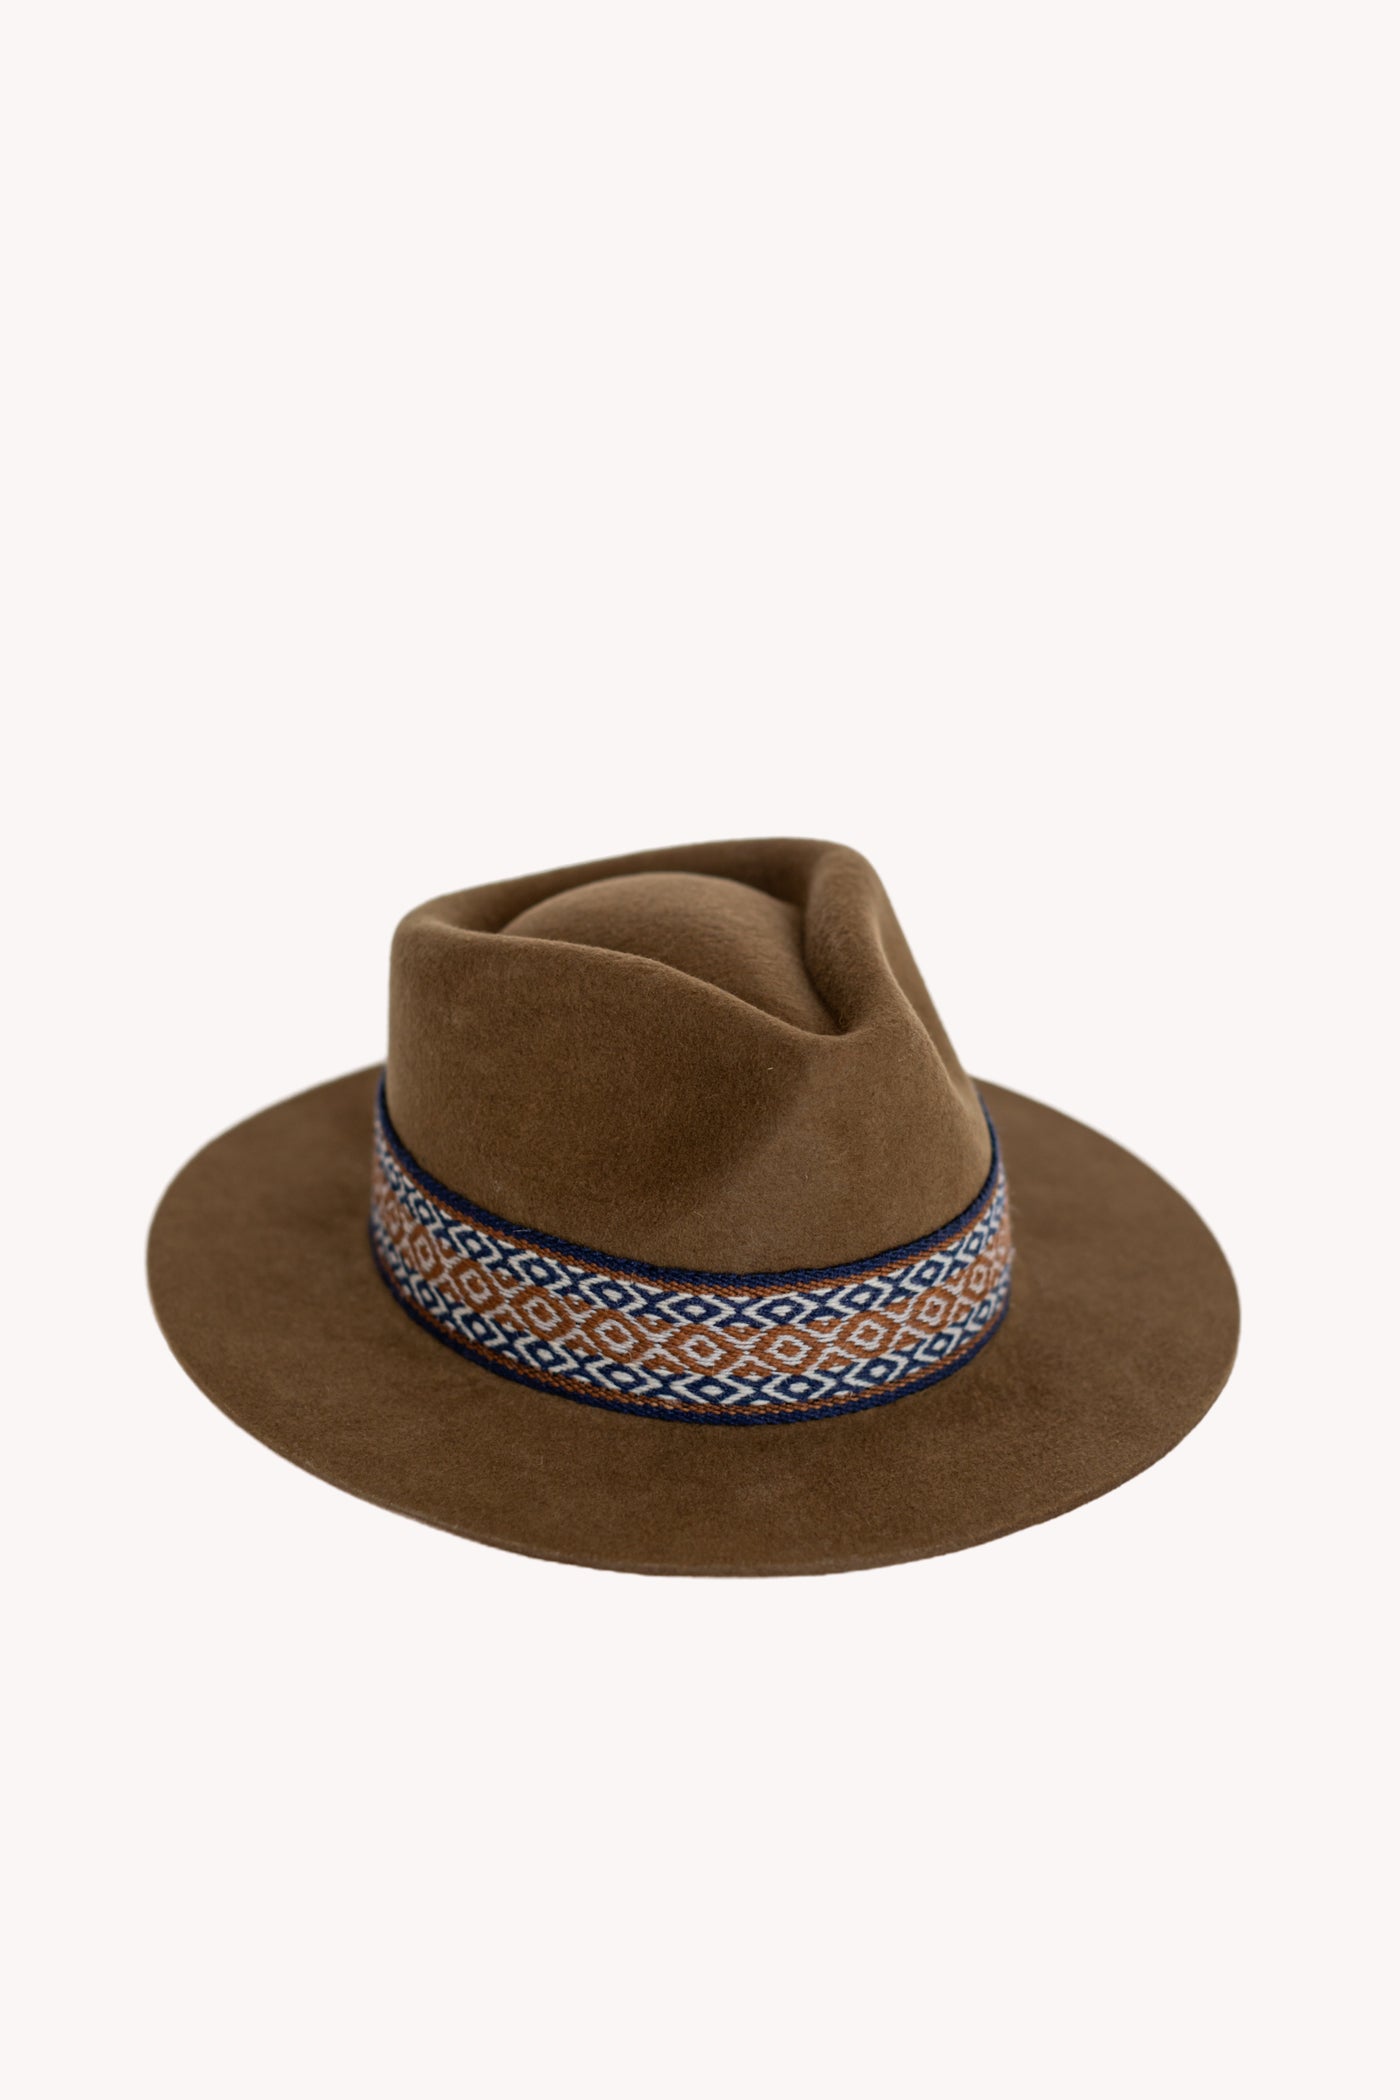 Brown Fedora style alpaca wool Peruvian hat